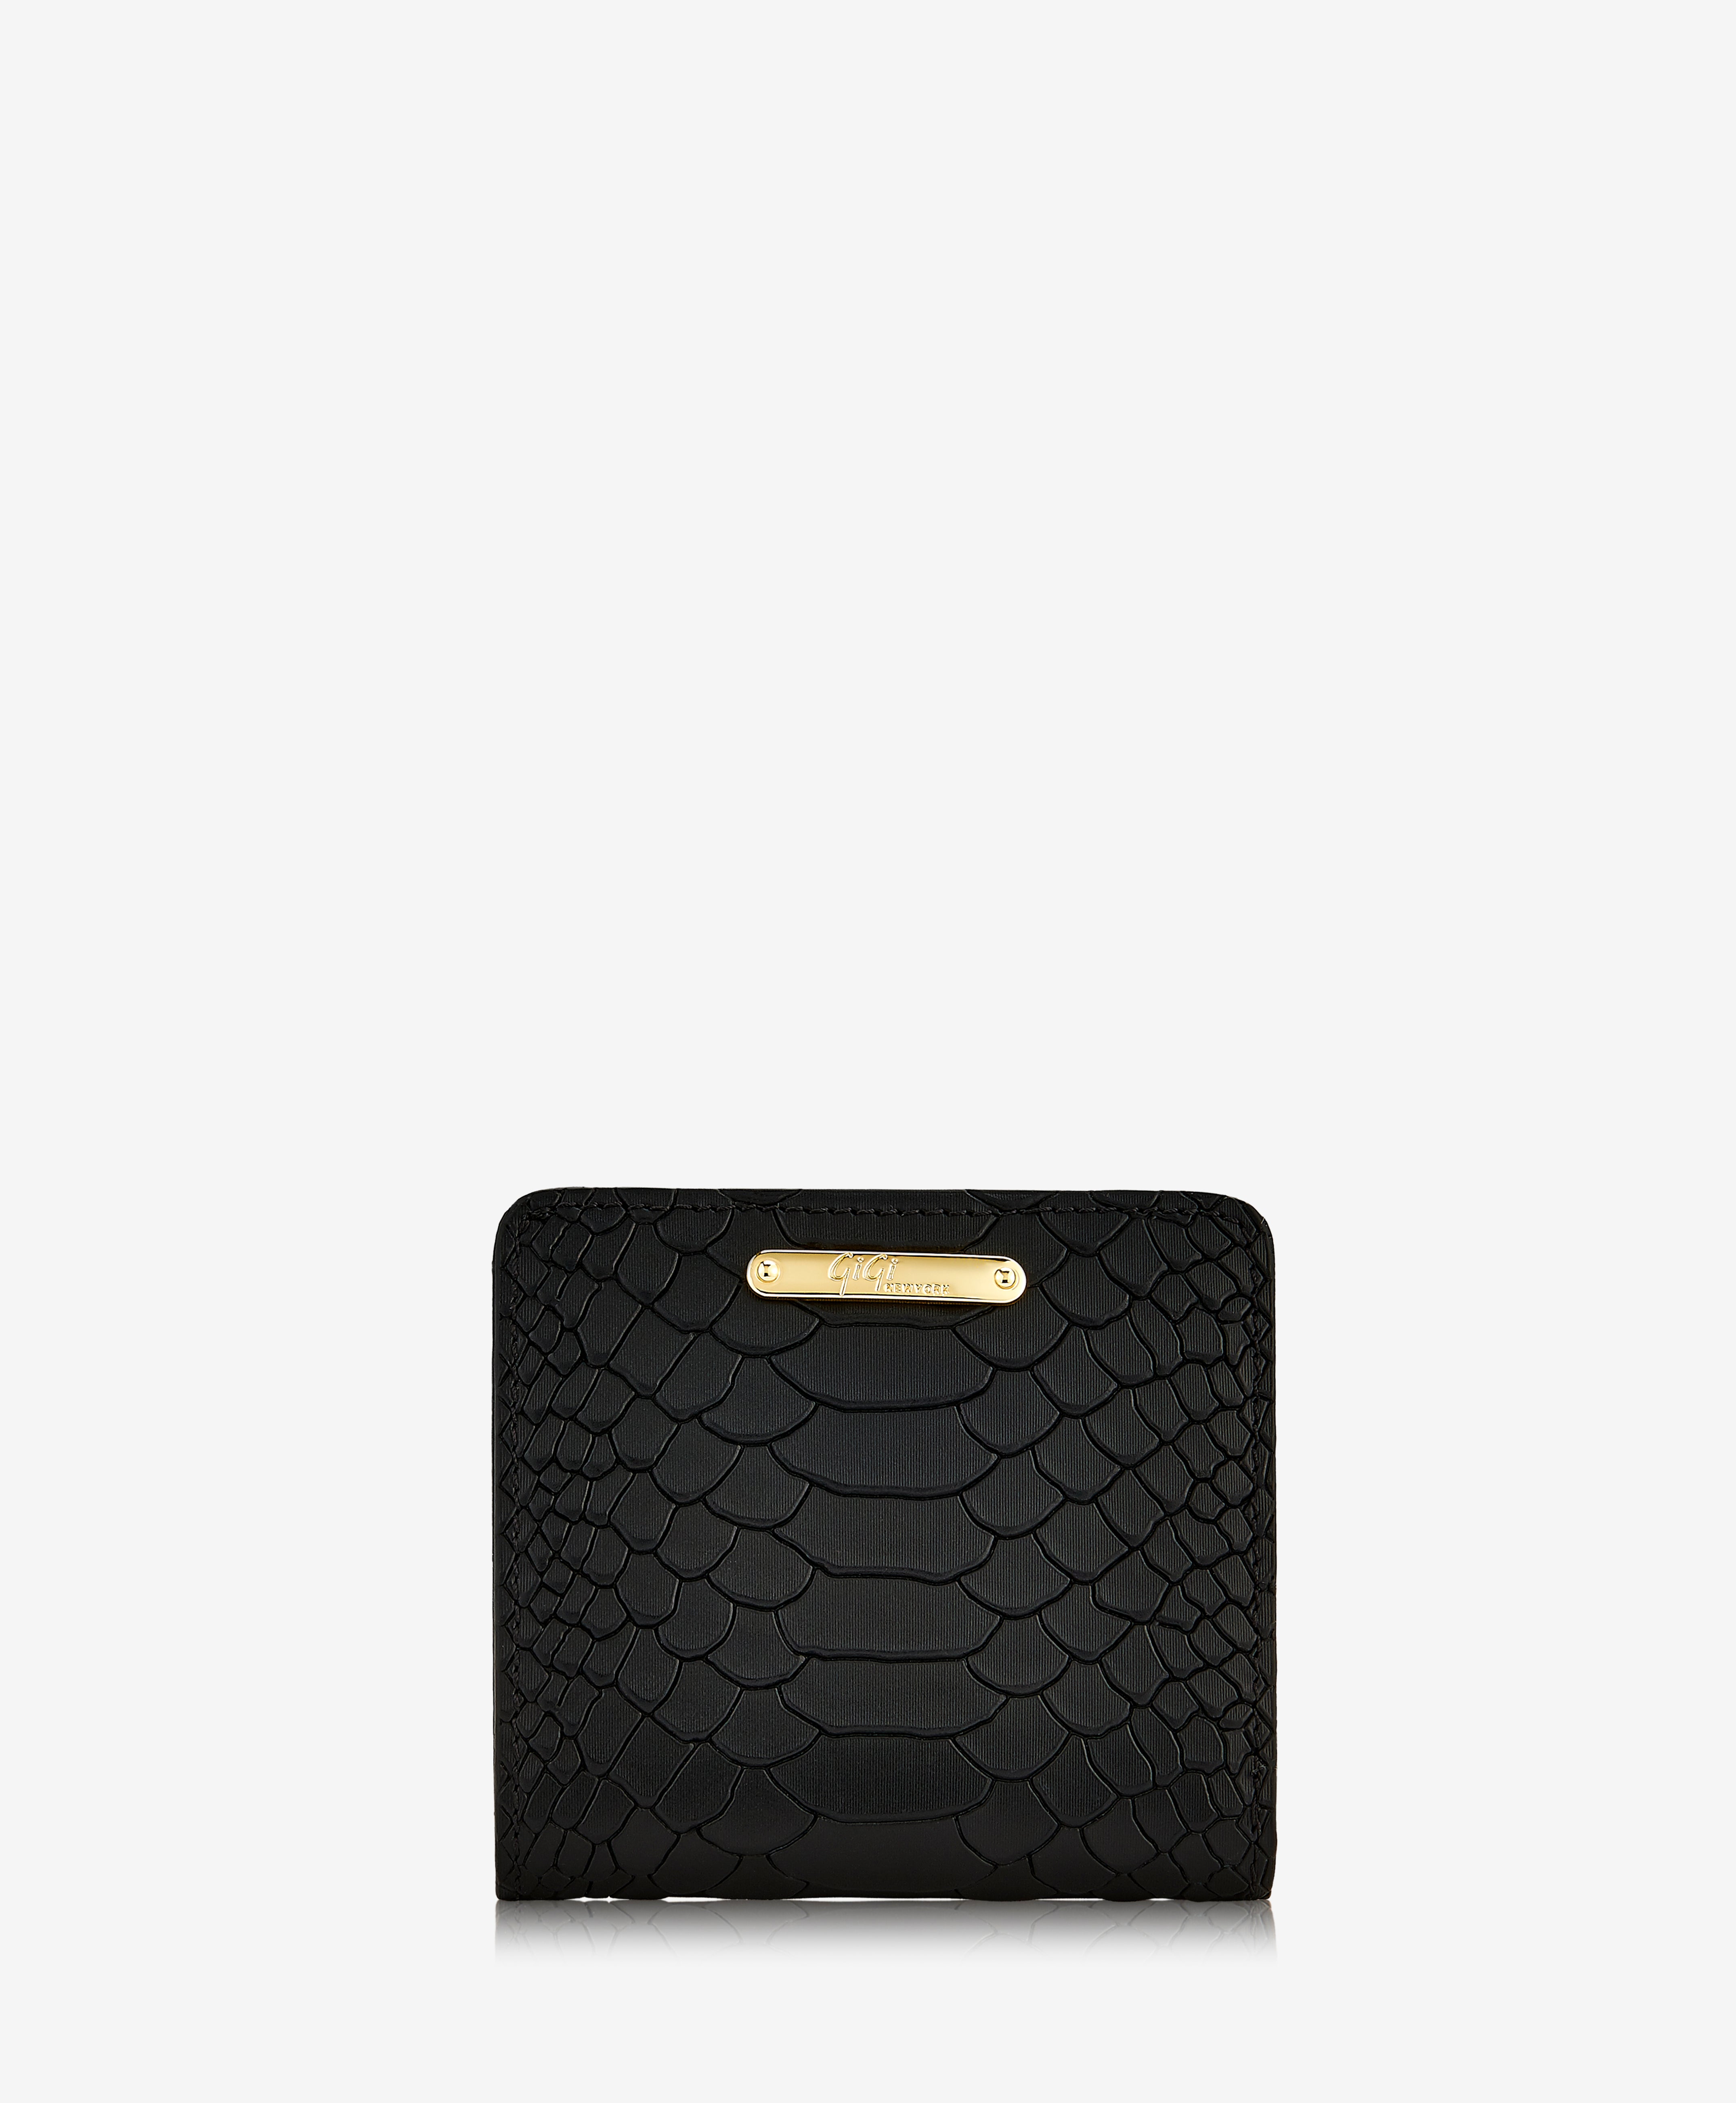 GiGi New York Mini Foldover Wallet Black Embossed Python Leather